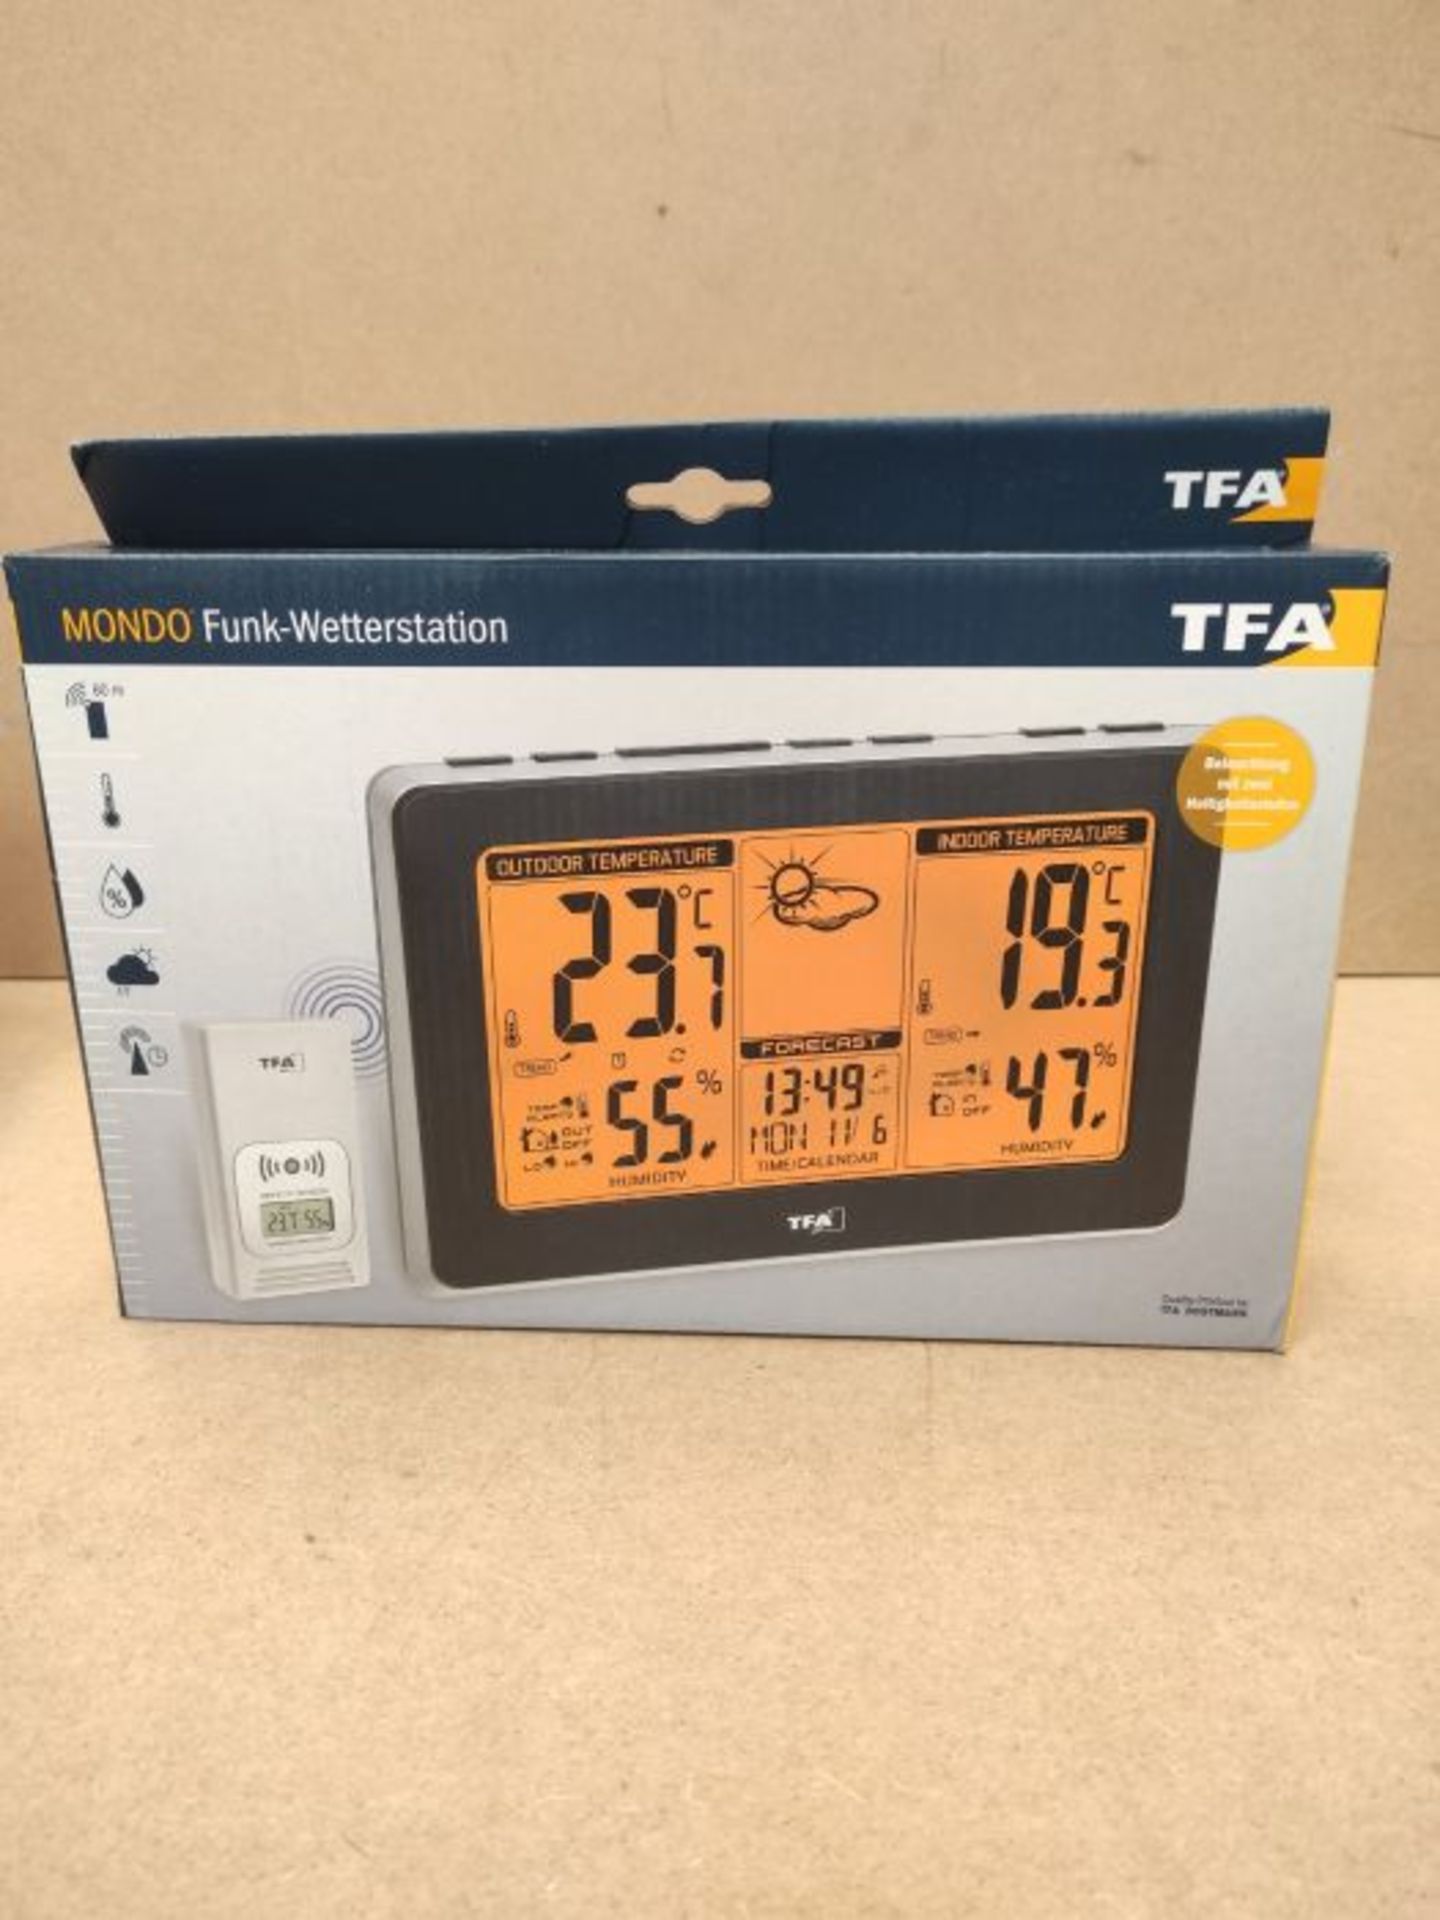 TFA Dostmann wireless weather station Mondo, 35.1151.01, indoor outdoor temperature an - Image 2 of 3